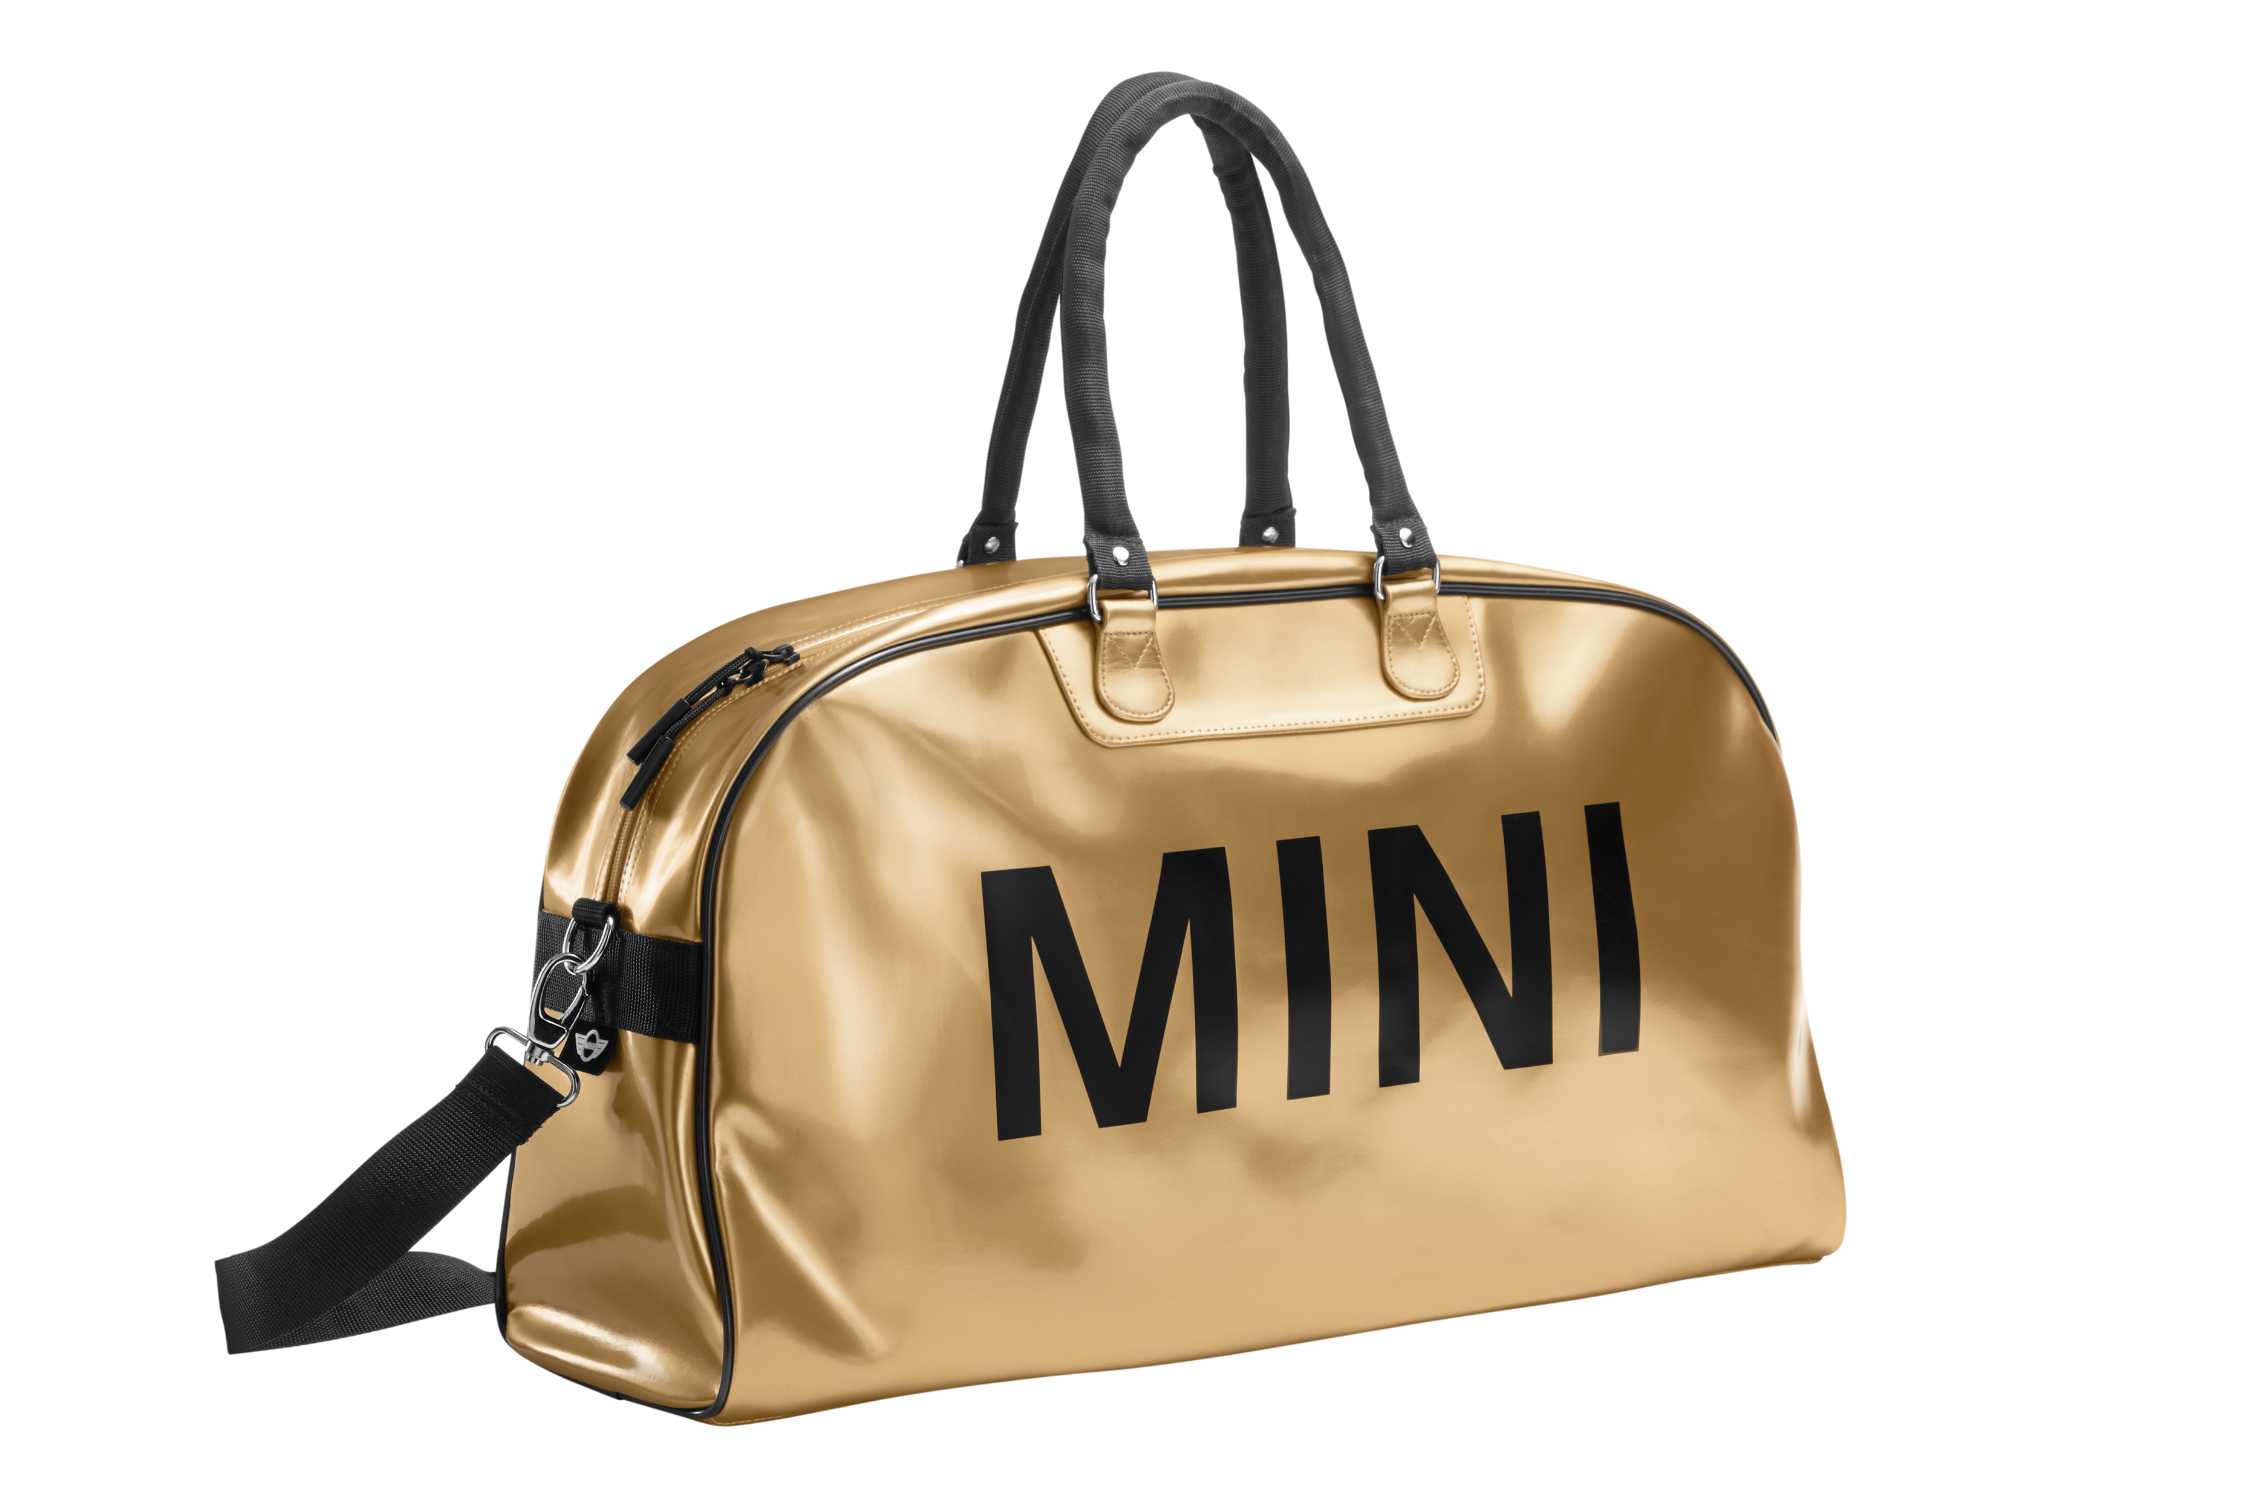 MINI Big Duffle Bag - Mini Cooper Forums - Mini Cooper Enthusiast Forums